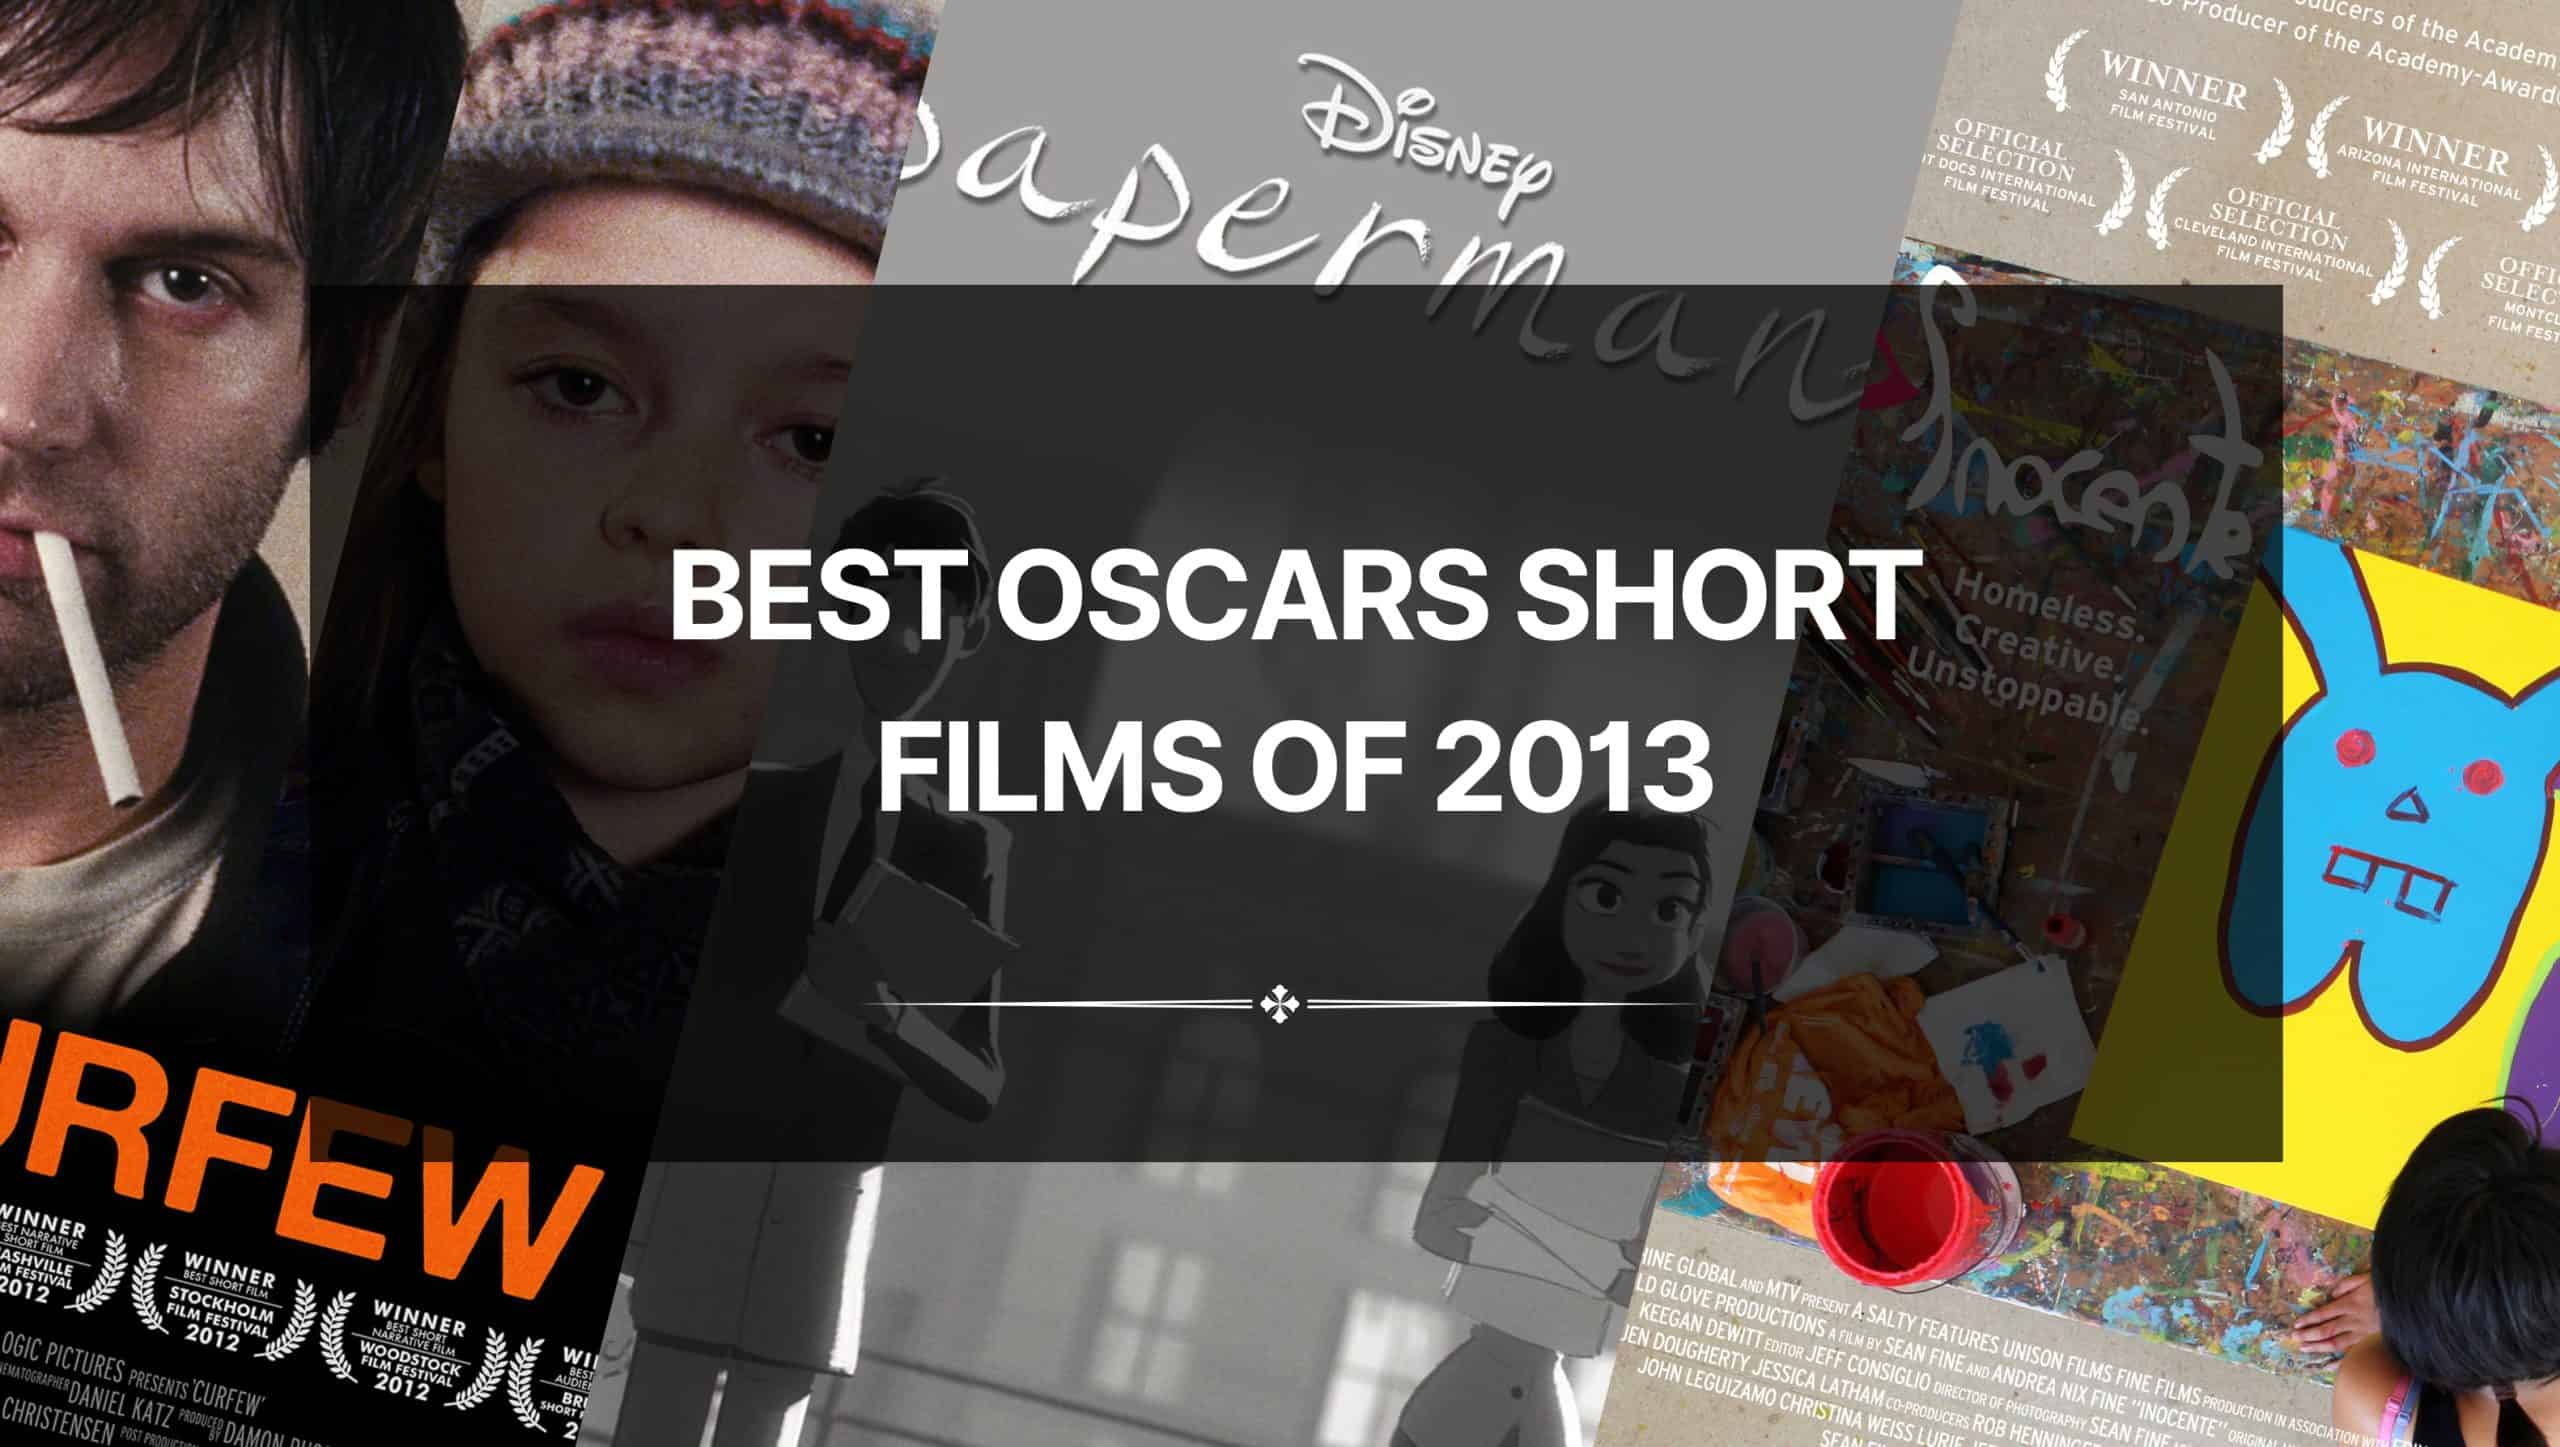 The Best Oscars Short Films of 2013 – Amazing Creativity